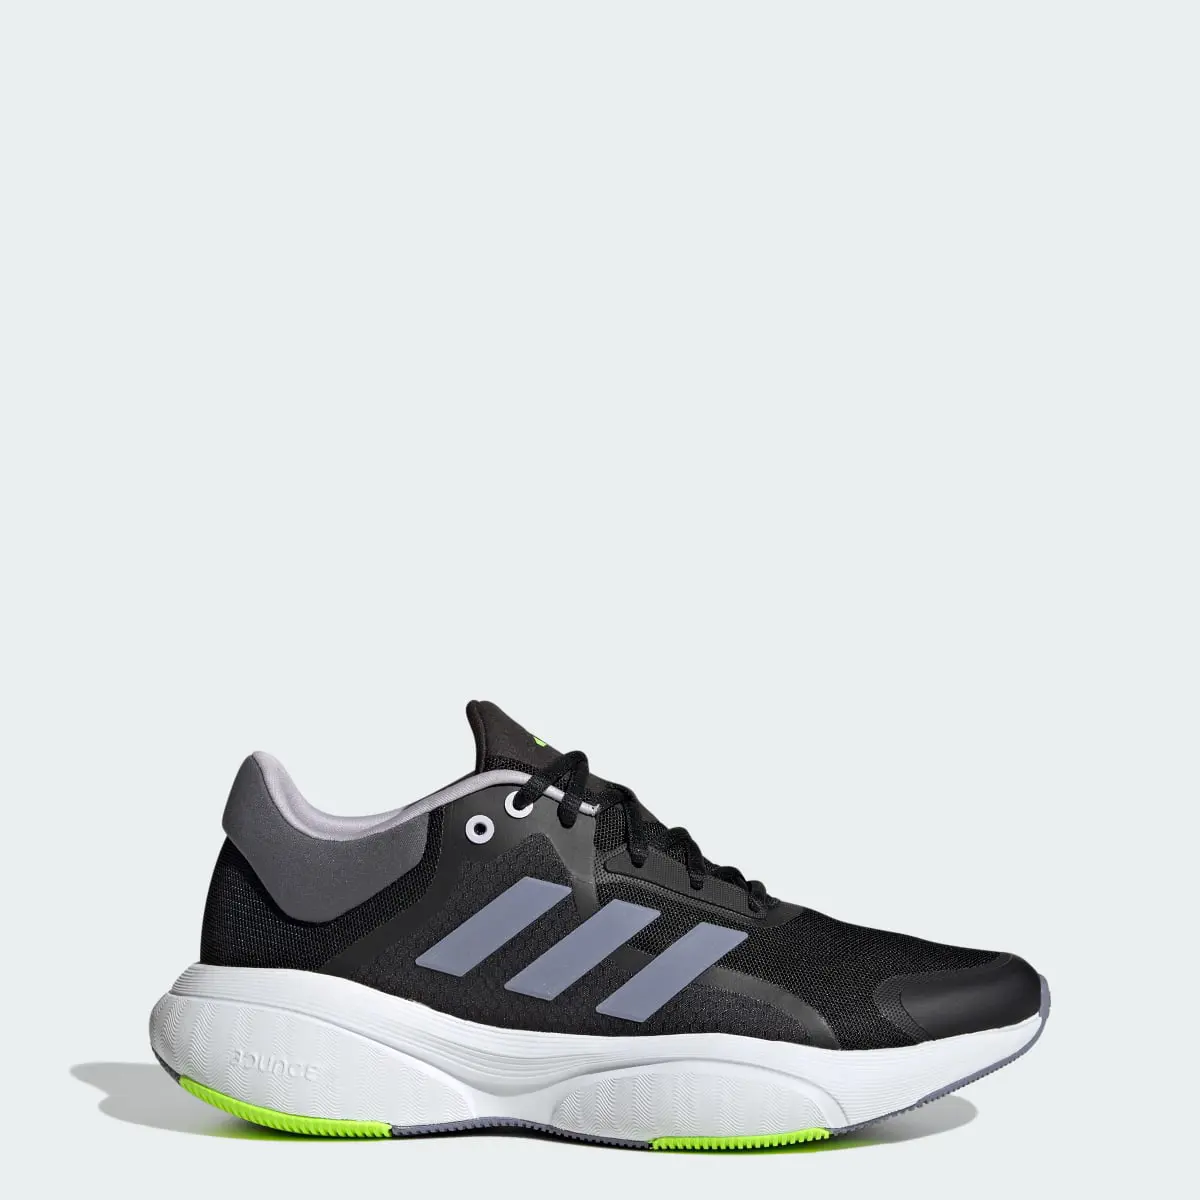 Adidas Response Ayakkabı. 1